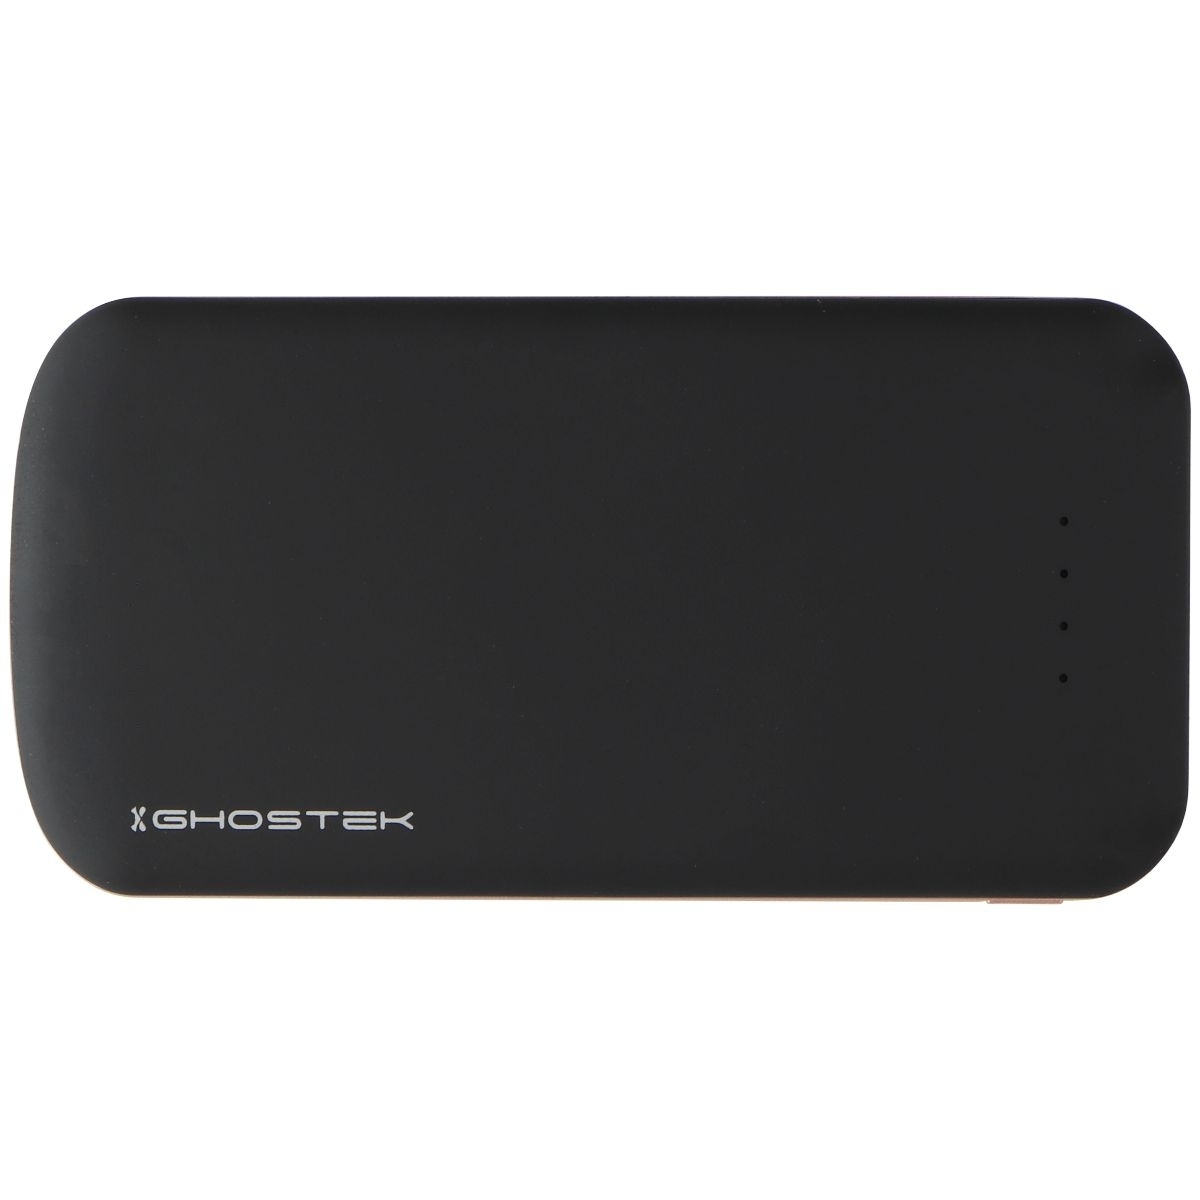 Ghostek Life NRGpak (5,000mAh) Portable Dual USB Power Bank - Black/Rose